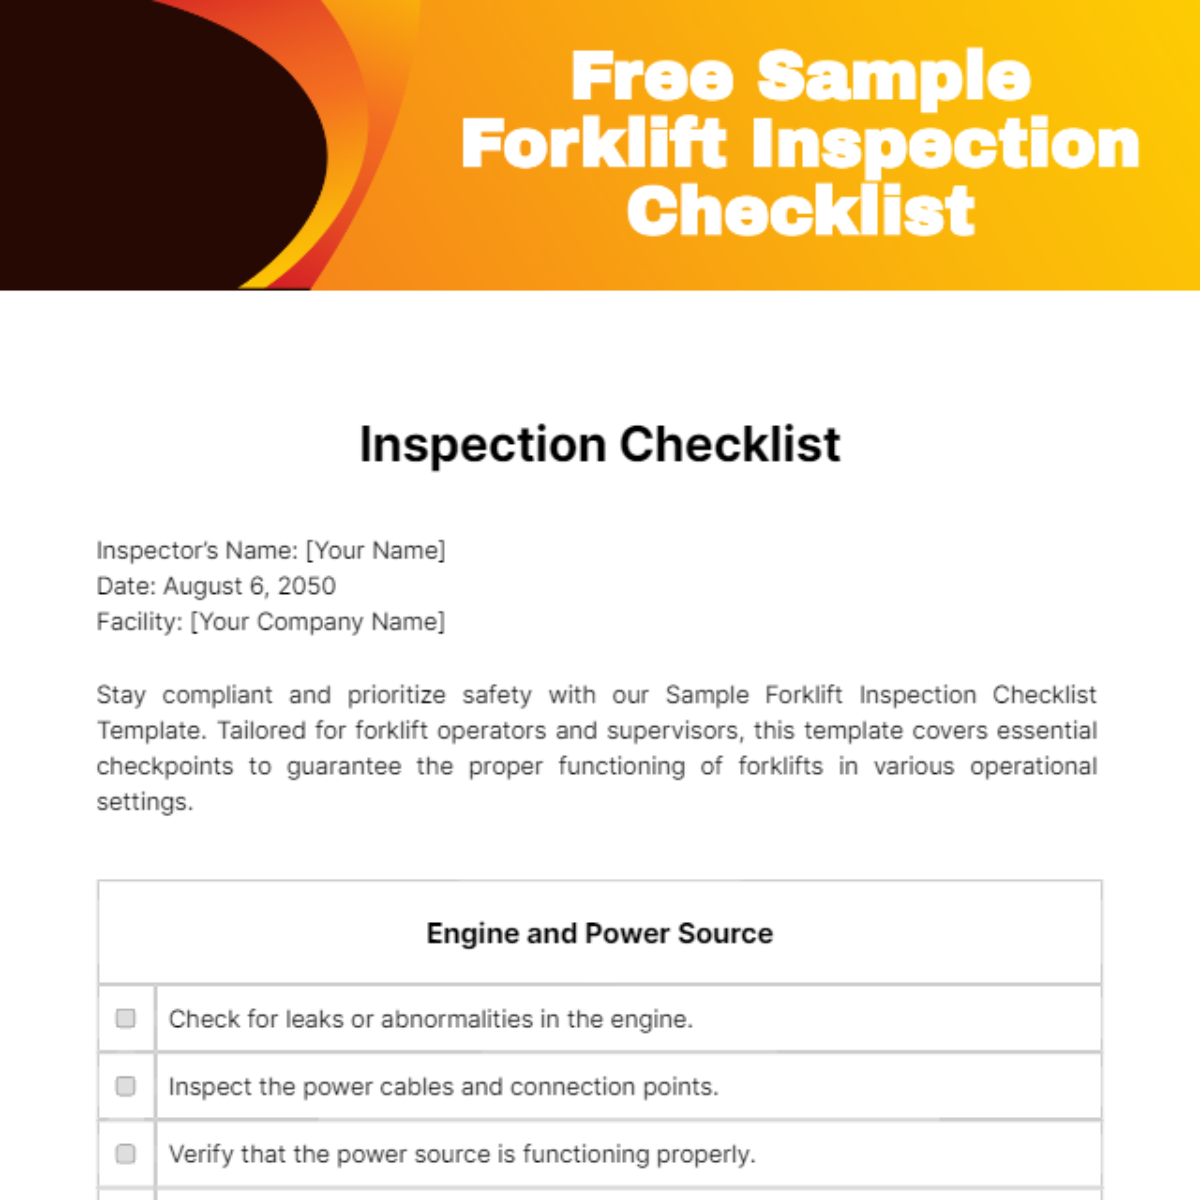 Free Sample Forklift Inspection Checklist Template